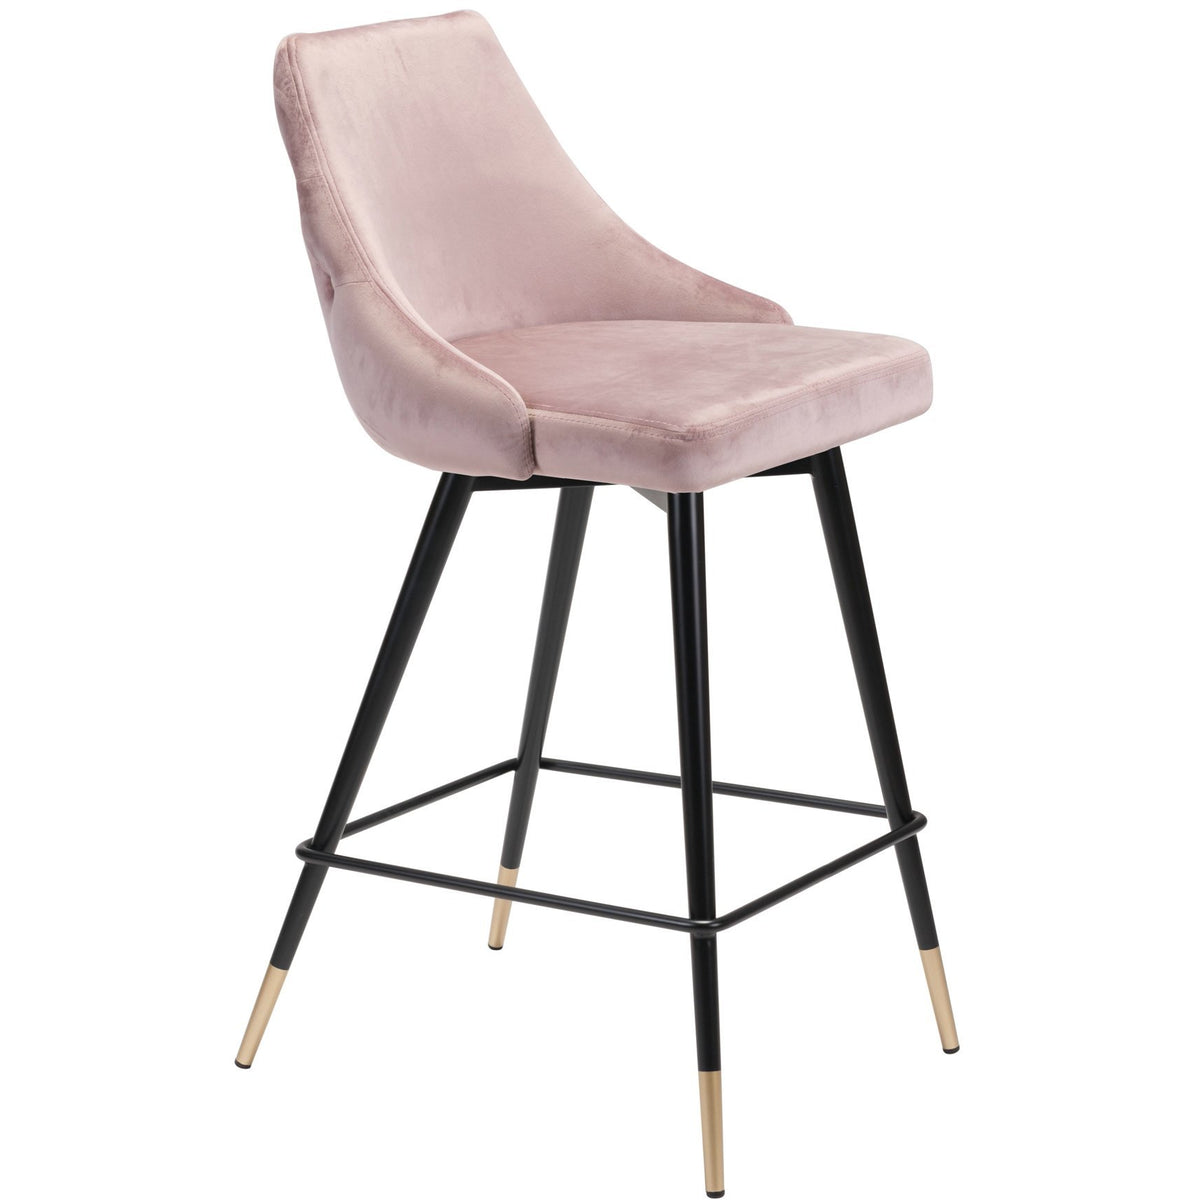 Zuo Modern Piccolo Counter Chair Pink Velvet  - 101092 Zuo Modern-Counter Chairs-Minimal And Modern Canada - 1